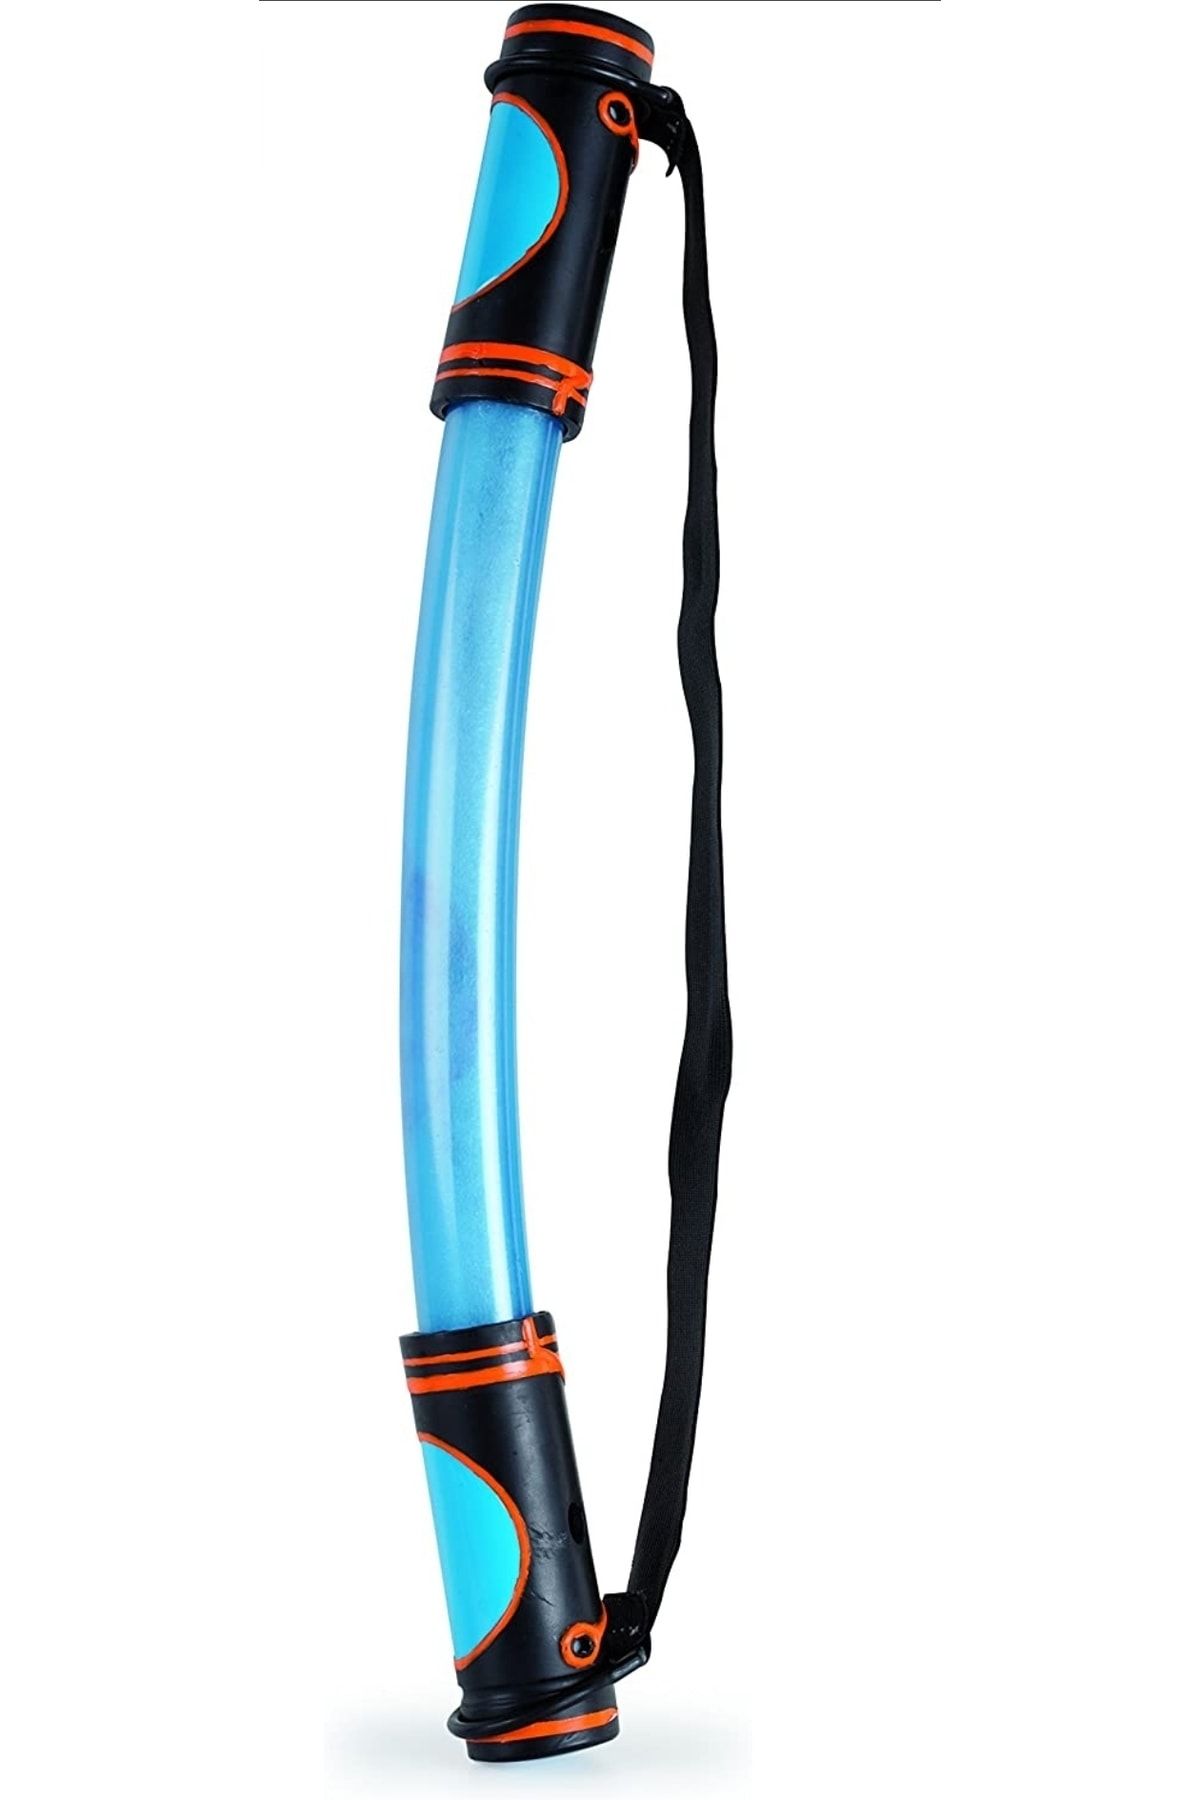 Mia Işın Kılıcı Laserang Mavi Renkli Işın Kılıcı Elastik Yapılı Işın Kılıcı 40cm